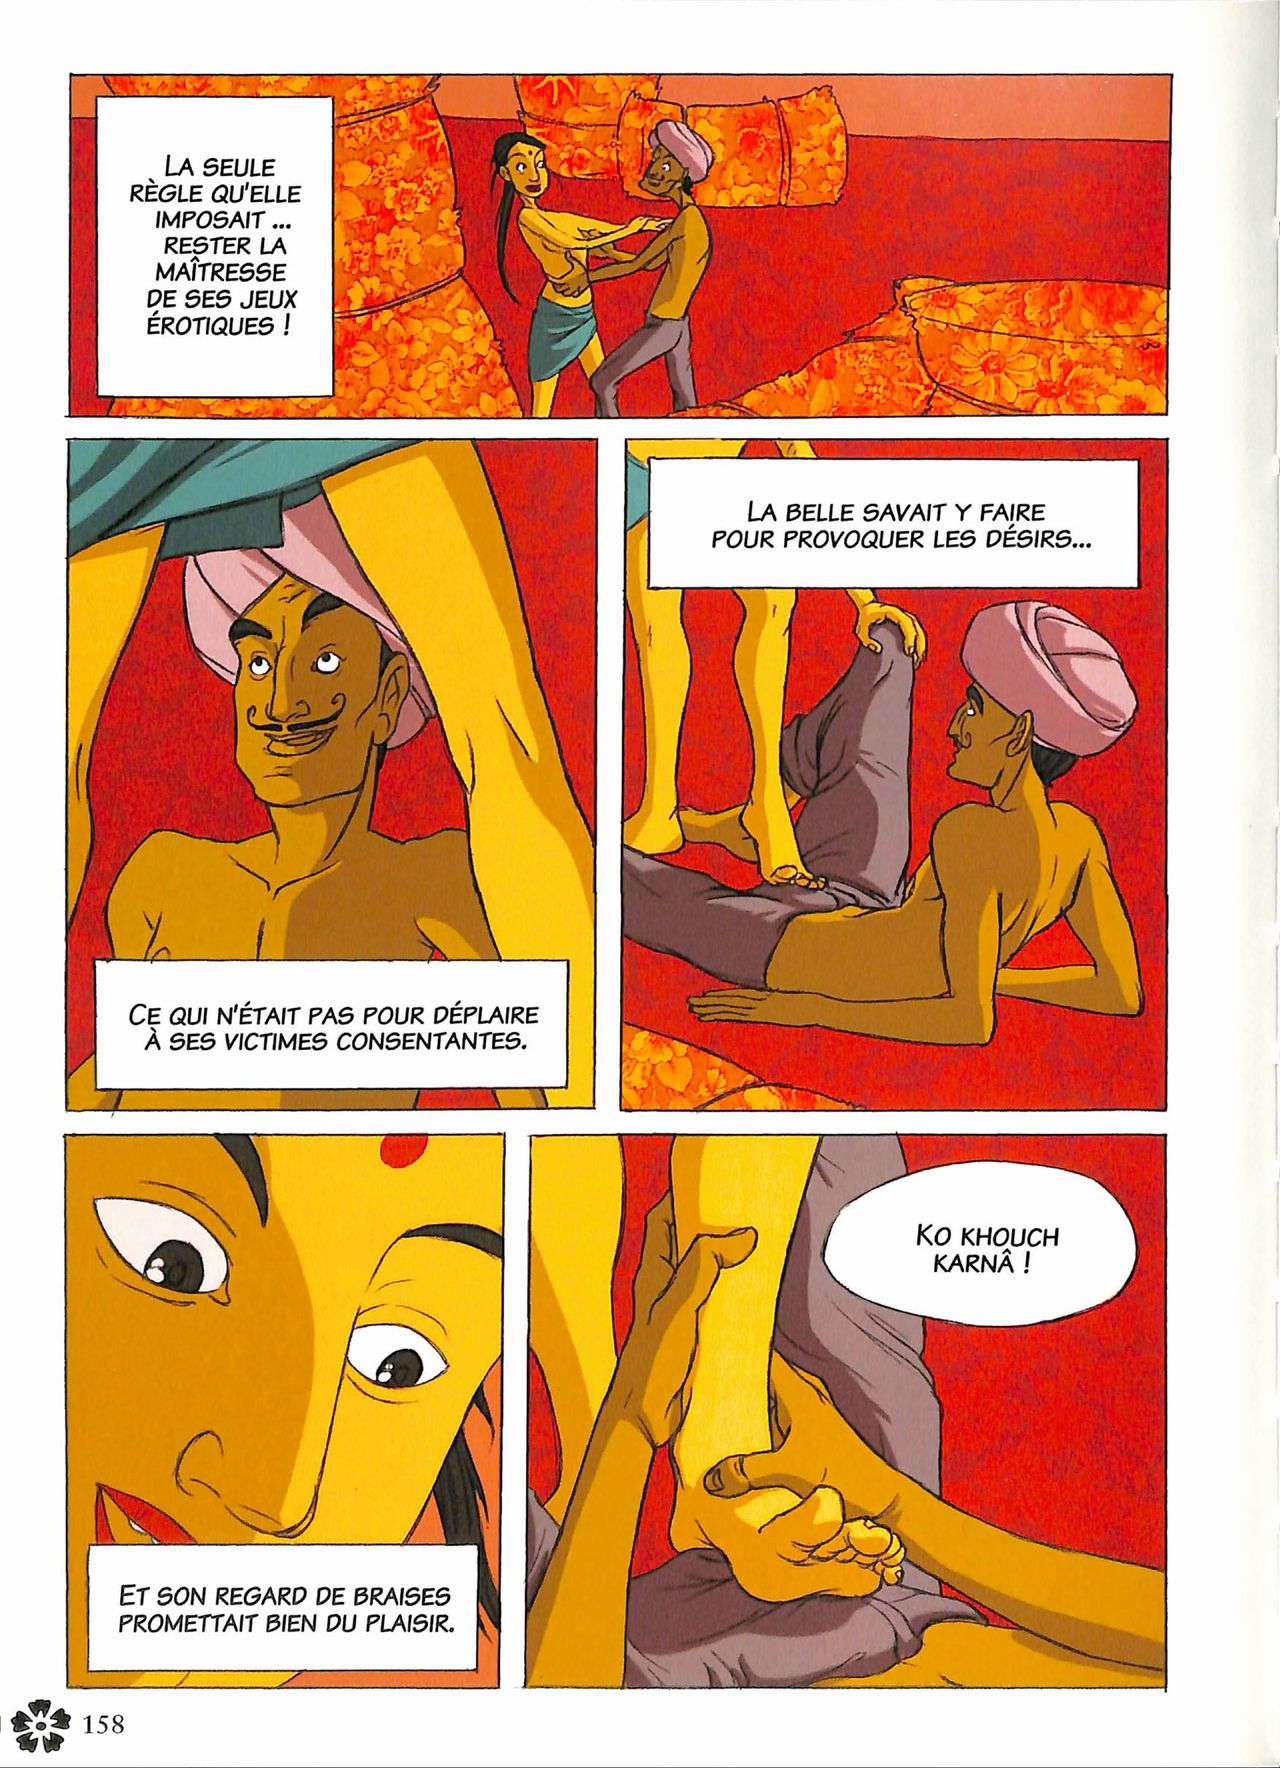 Kama Sutra en bandes dessinées - Kama Sutra with Comics numero d'image 158